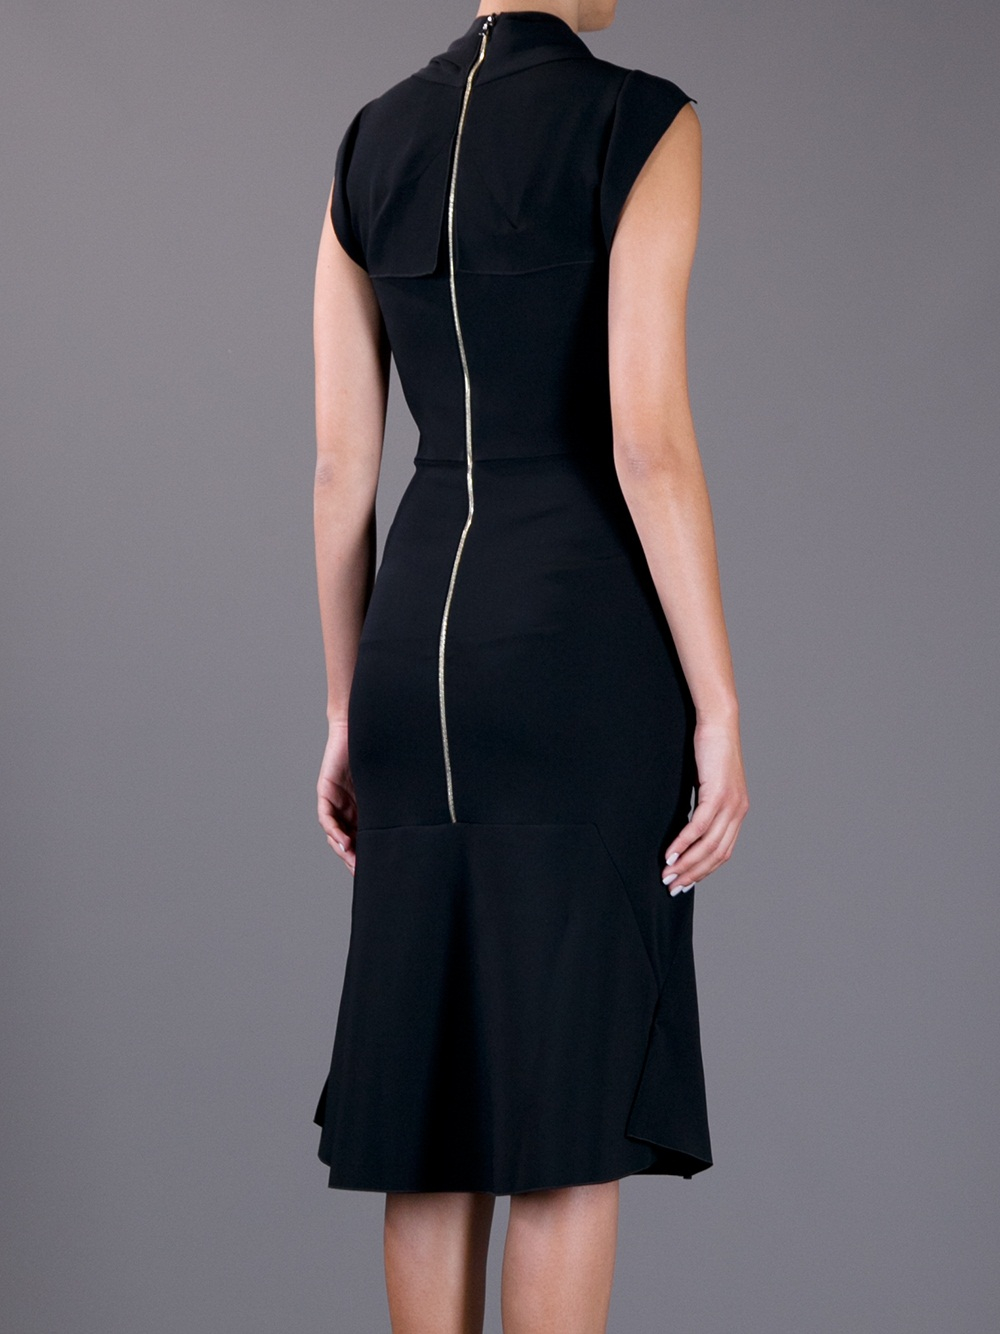 Lyst - Roland mouret Asymmetric Dress in Black